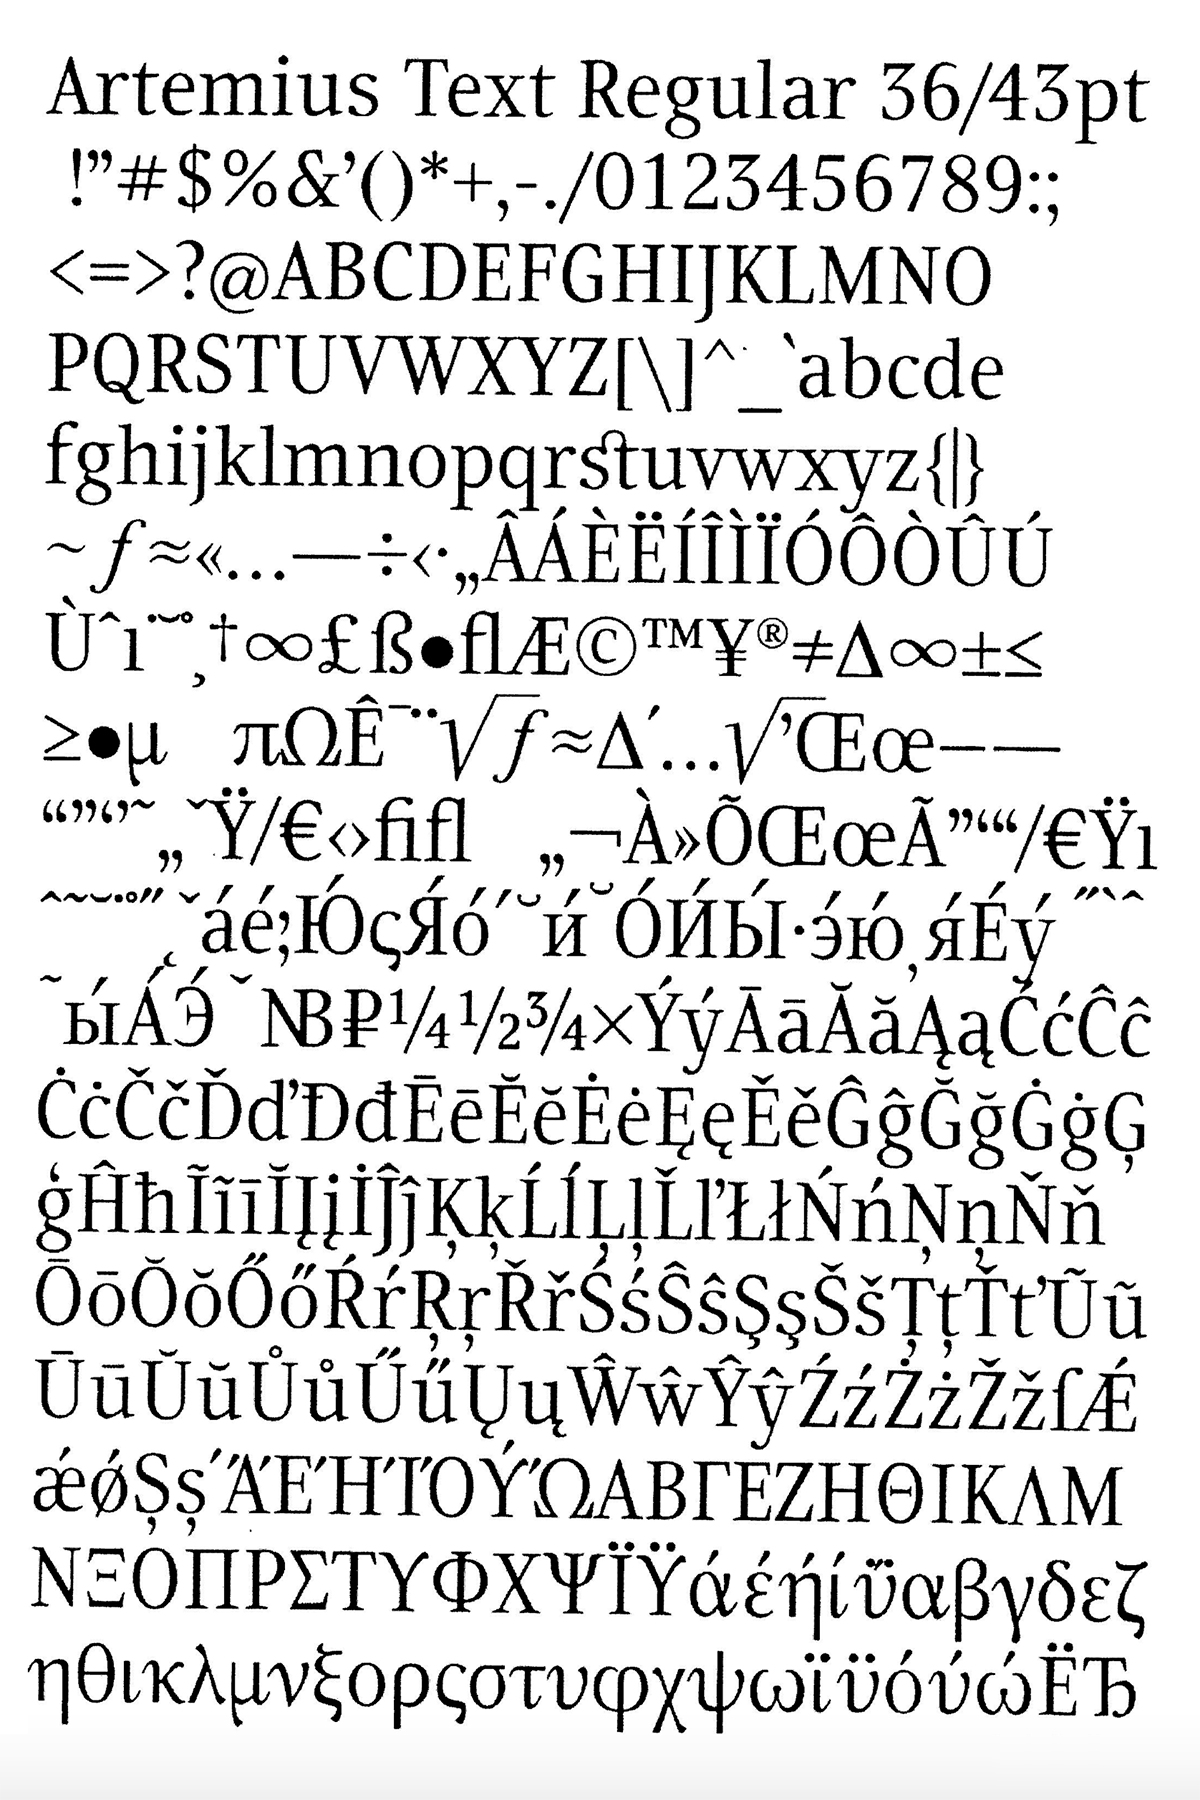 Артемий Лебедев запатентовал шрифт «Артемиус» еще в 2012 году